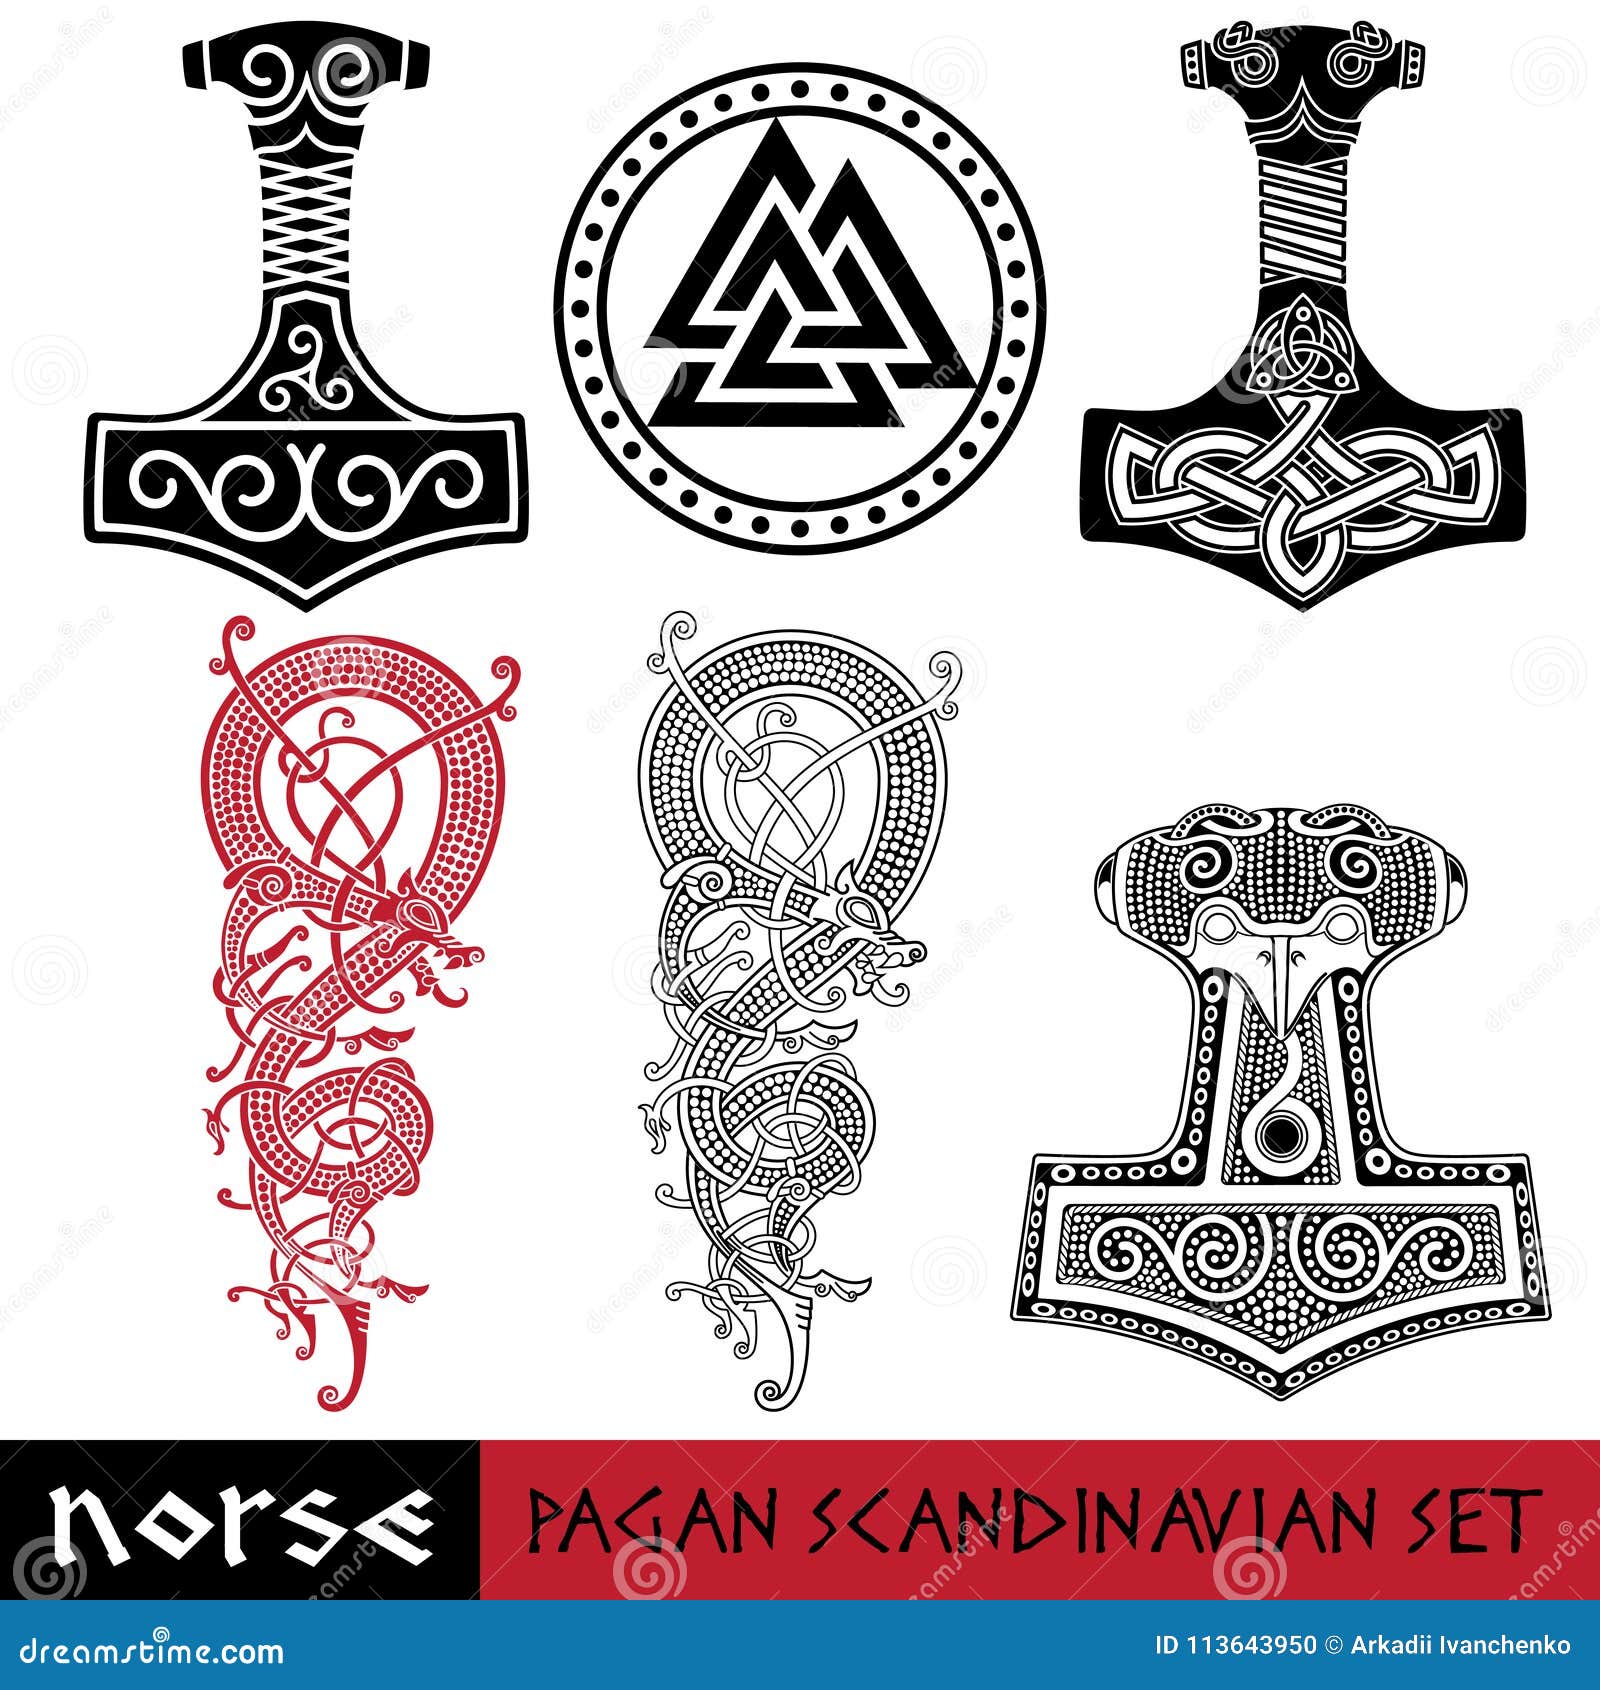 Tattoos by Captain Bret & Celtic Tattoo - Thors Hammer Viking Tattoo  www.tribal-celtic-tattoo.com Tattoos by Captain Bret & Celtic Tattoo # thorshammer #thor #hammer #norse #knotwork #nordic #norse #scandinavian  #shield #viking #NewportRITattoo #tattoo #